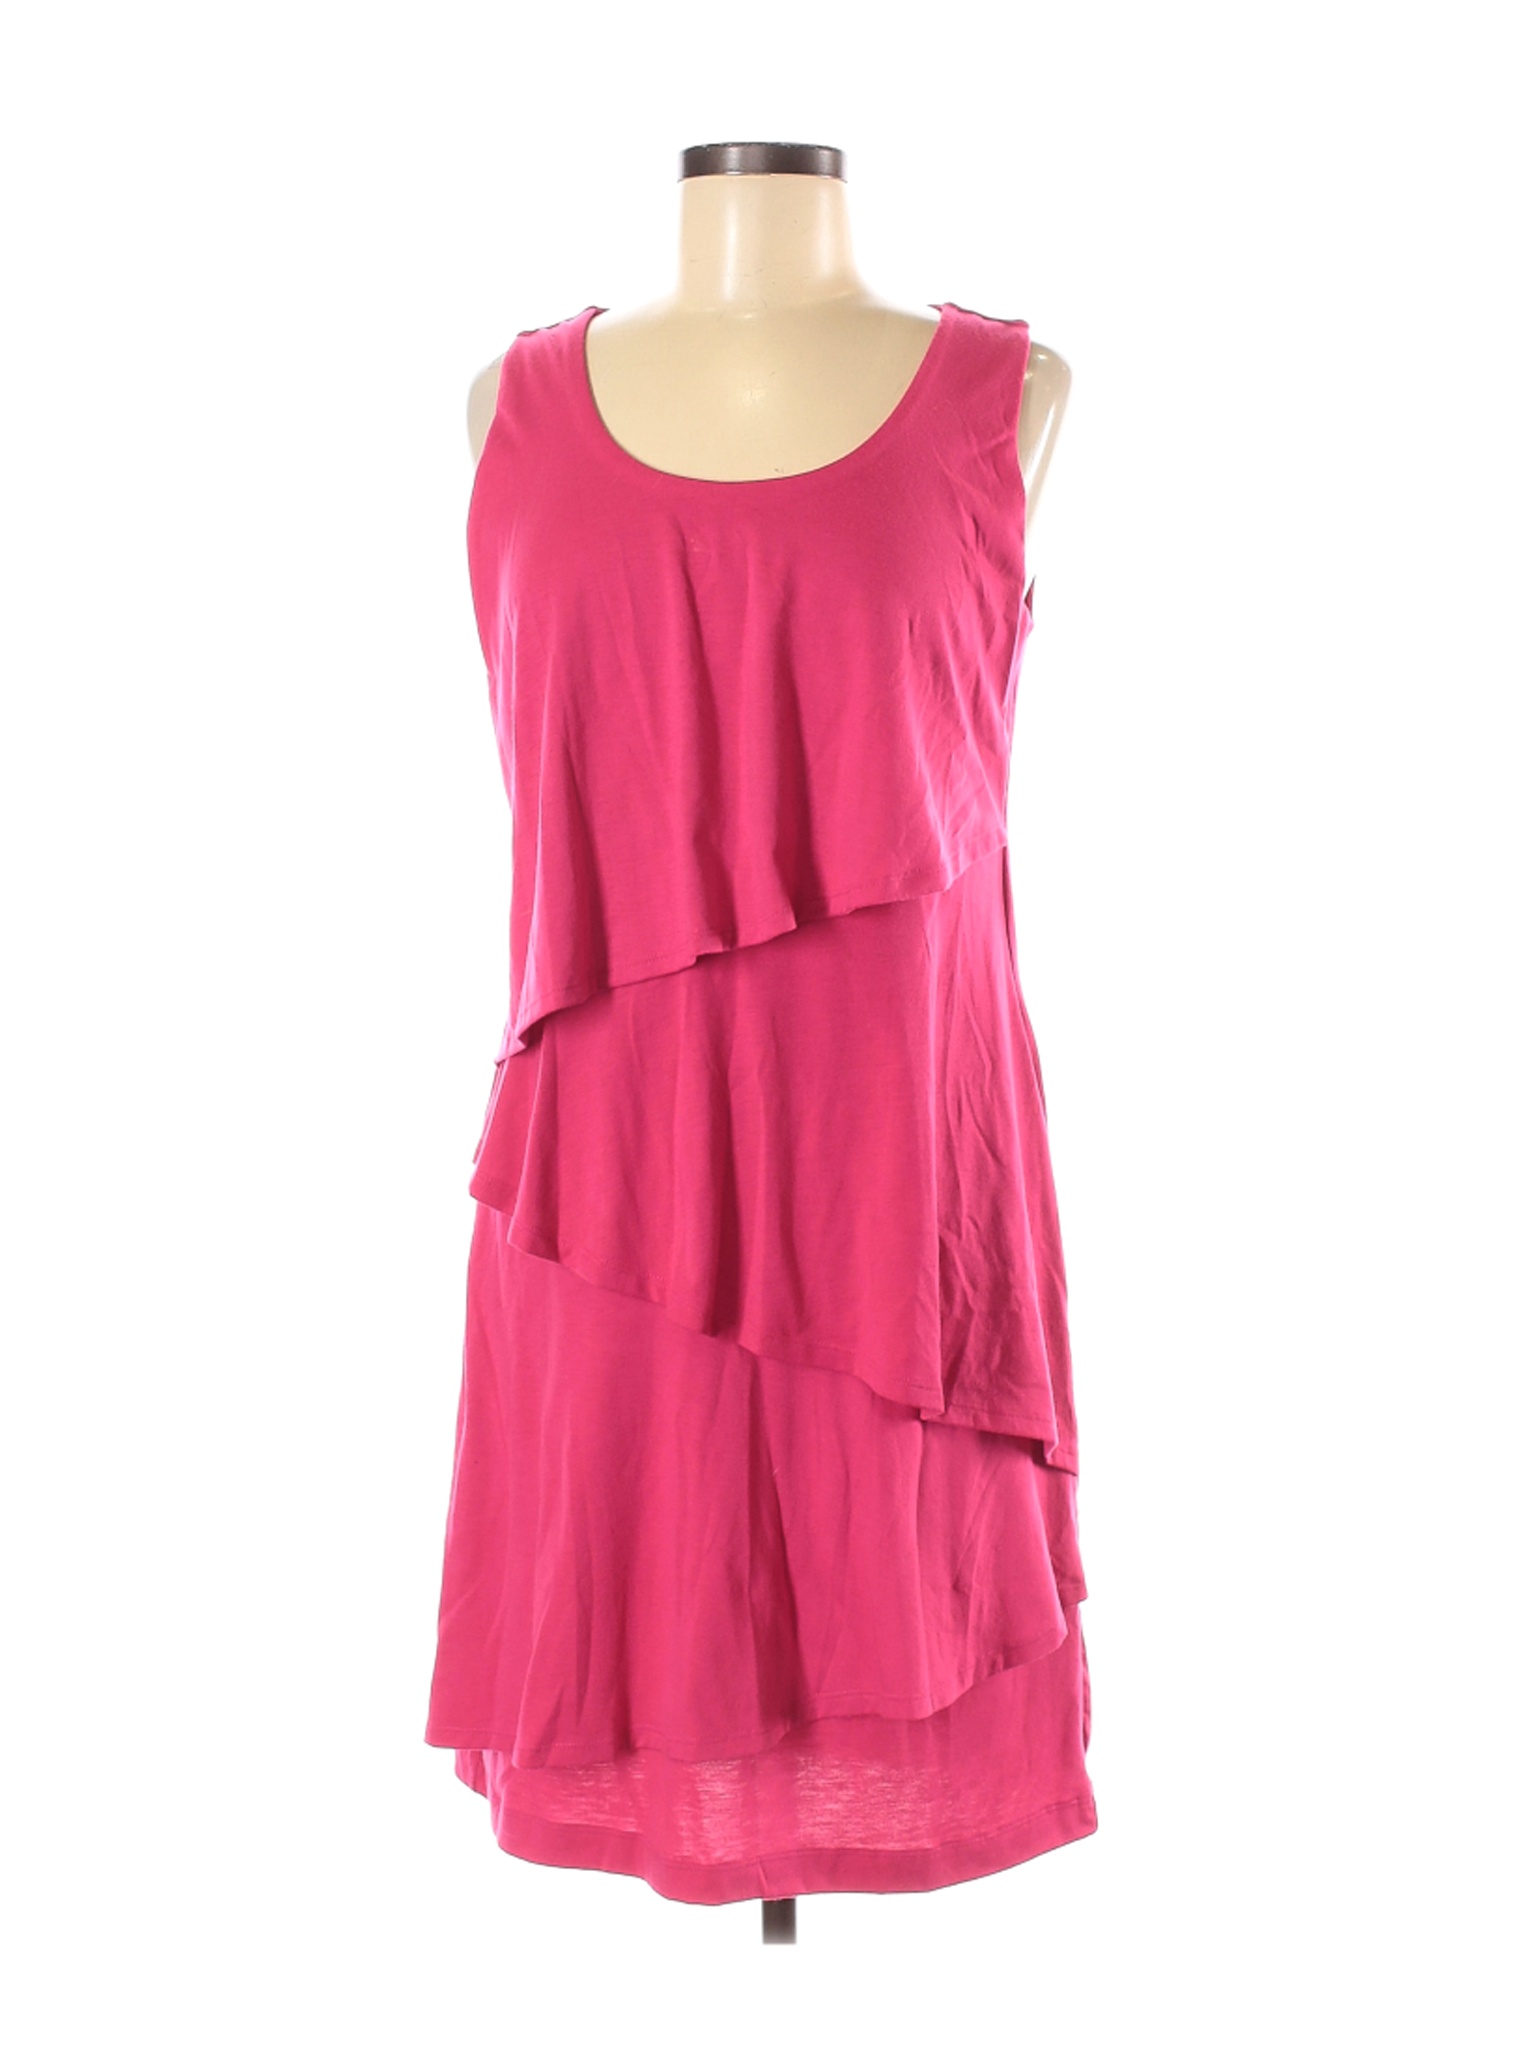 Cato Women Pink Casual Dress M | eBay